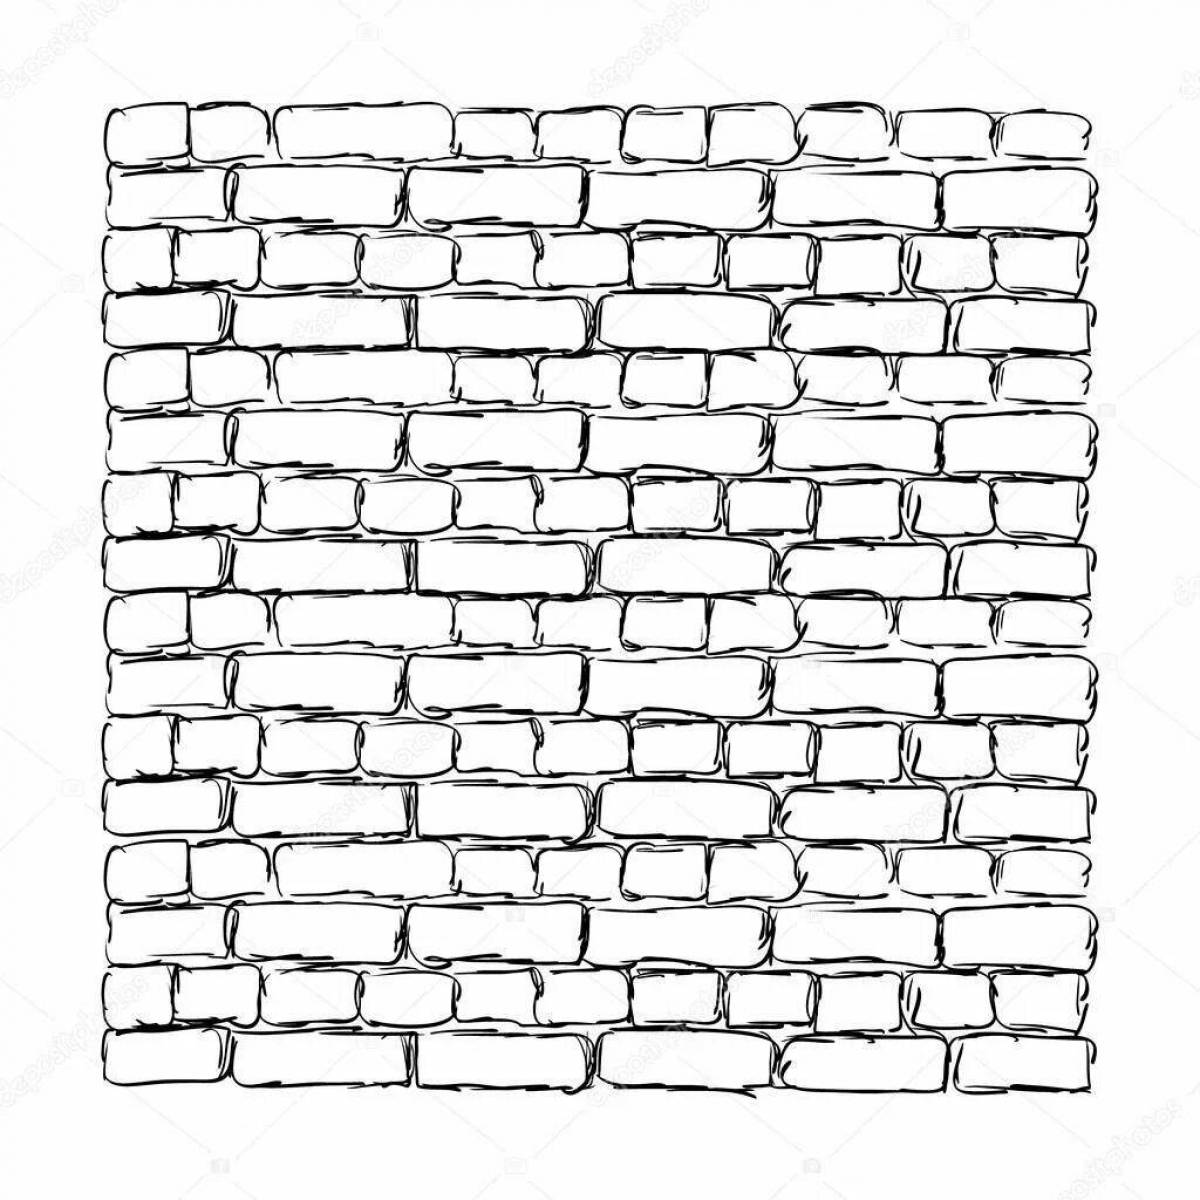 Adorable brick wall coloring page